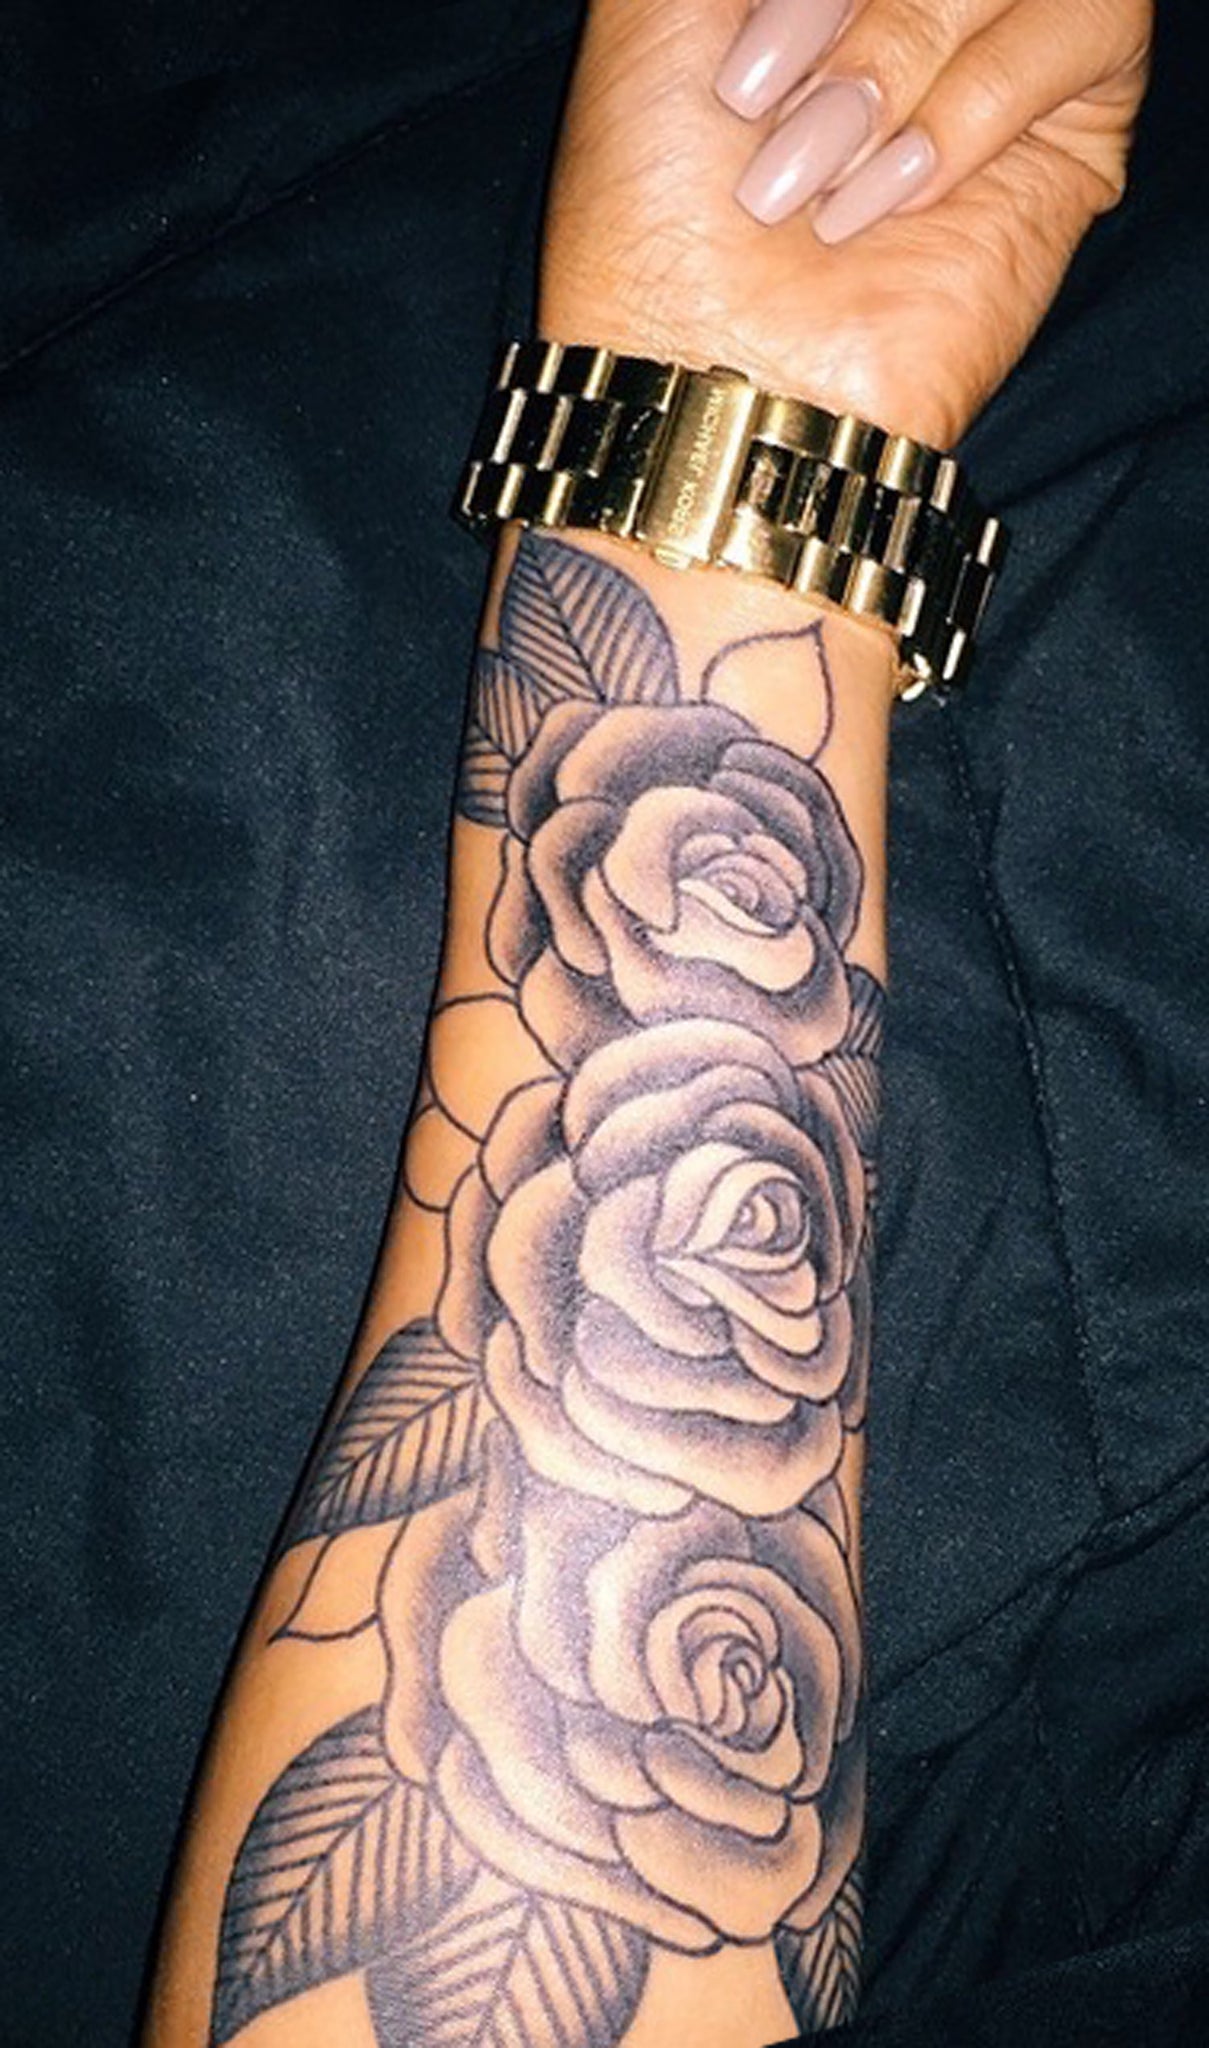 Realistic Vintage Rose Forearm Tattoo Ideas for Women - Black Floral Flower Arm Sleeve Tat - www.MyBodiArt.com